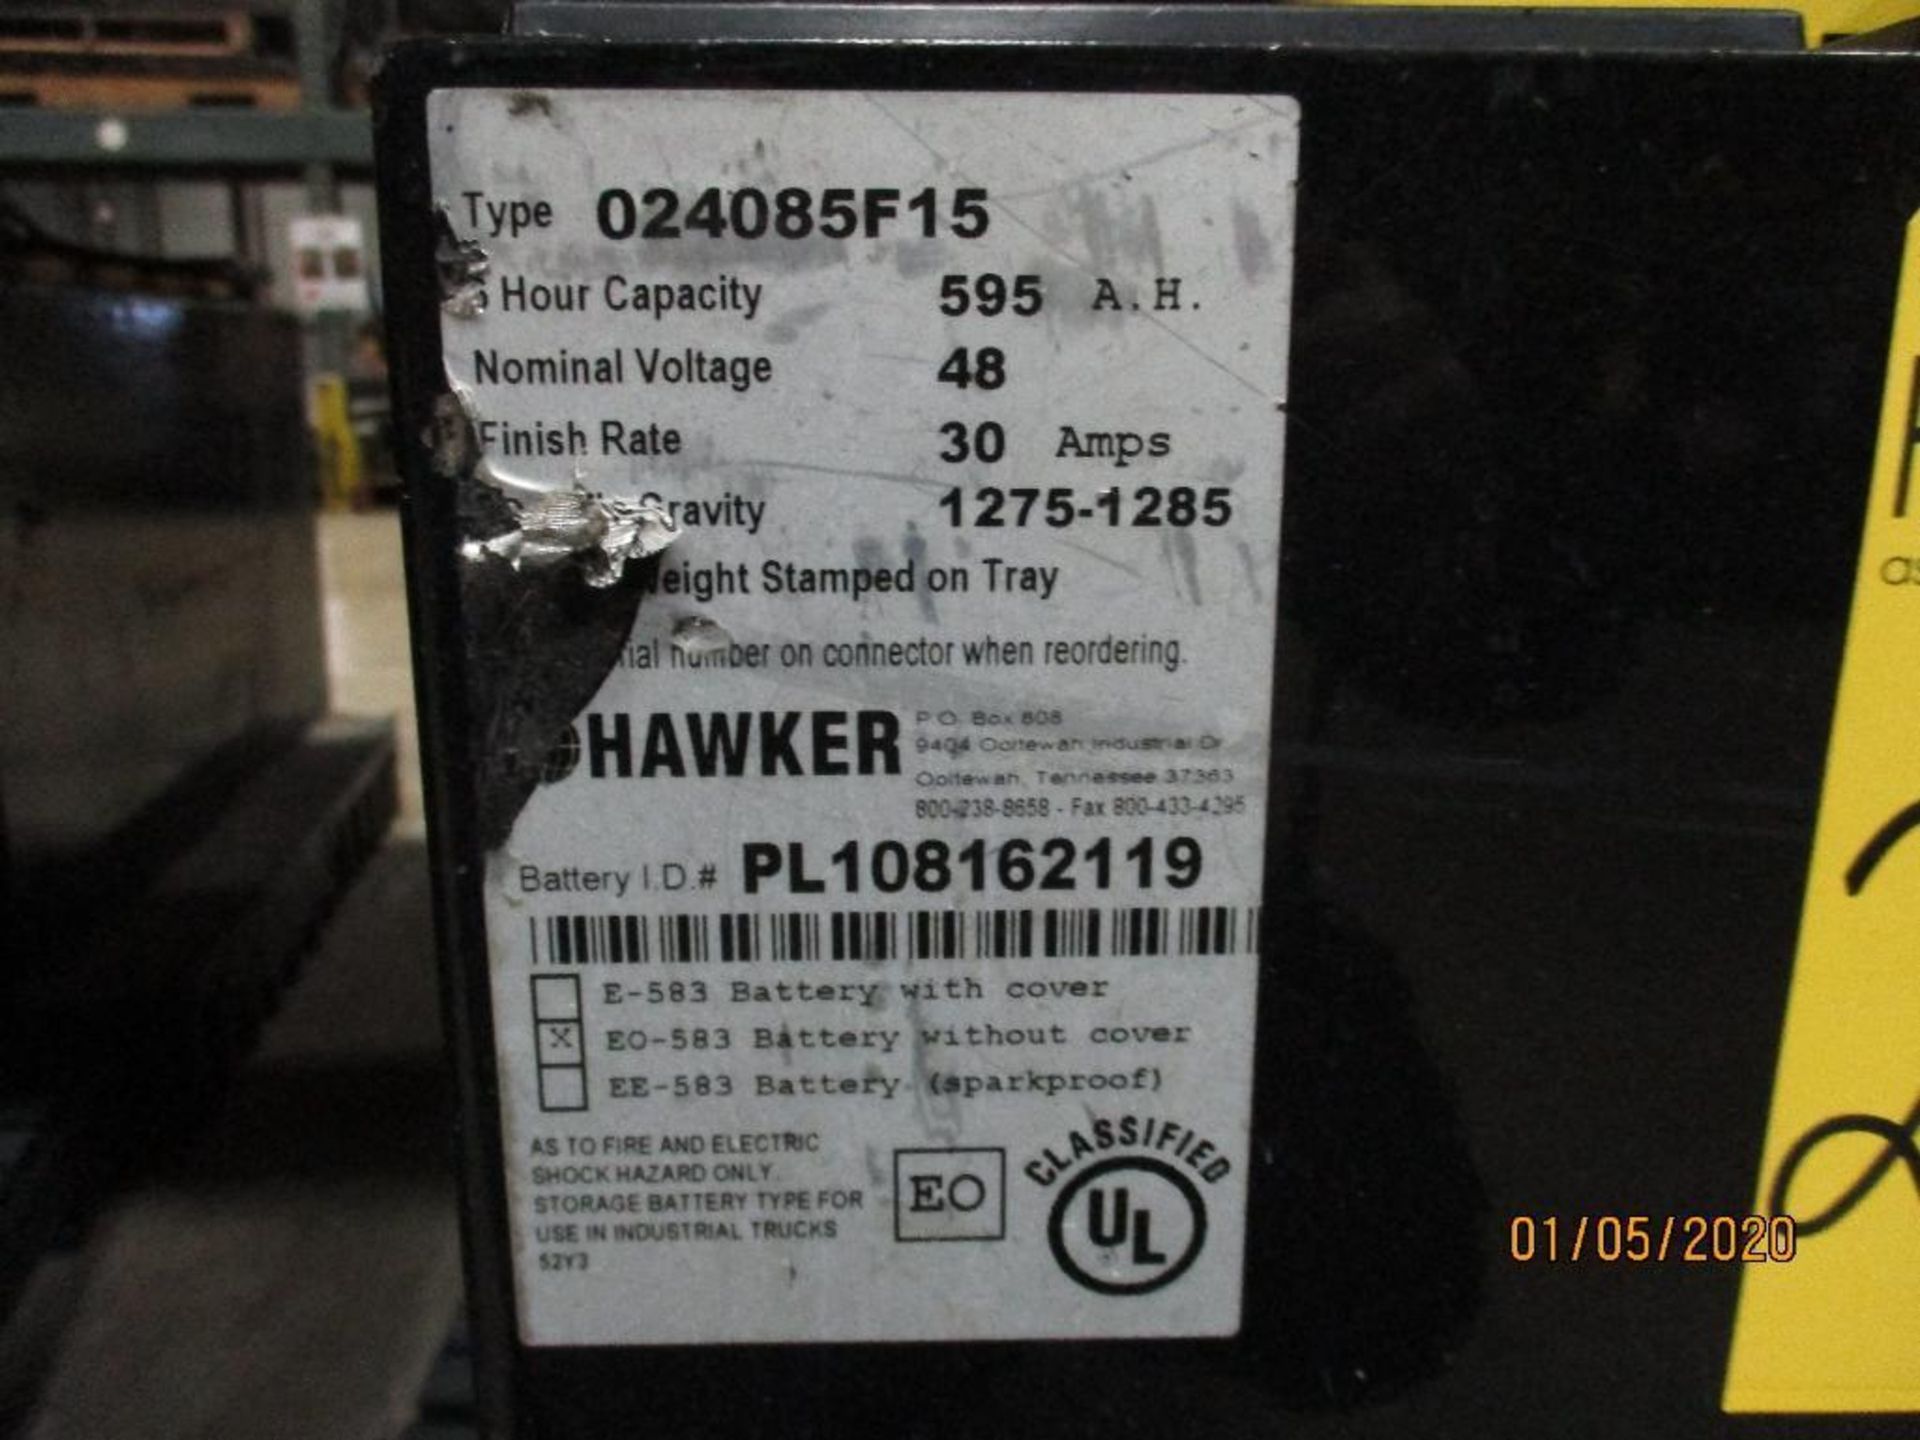 Hawker Forklift Battery (70) 595 Amp Hours, 48v, Type No. 024085F15 - Image 2 of 2